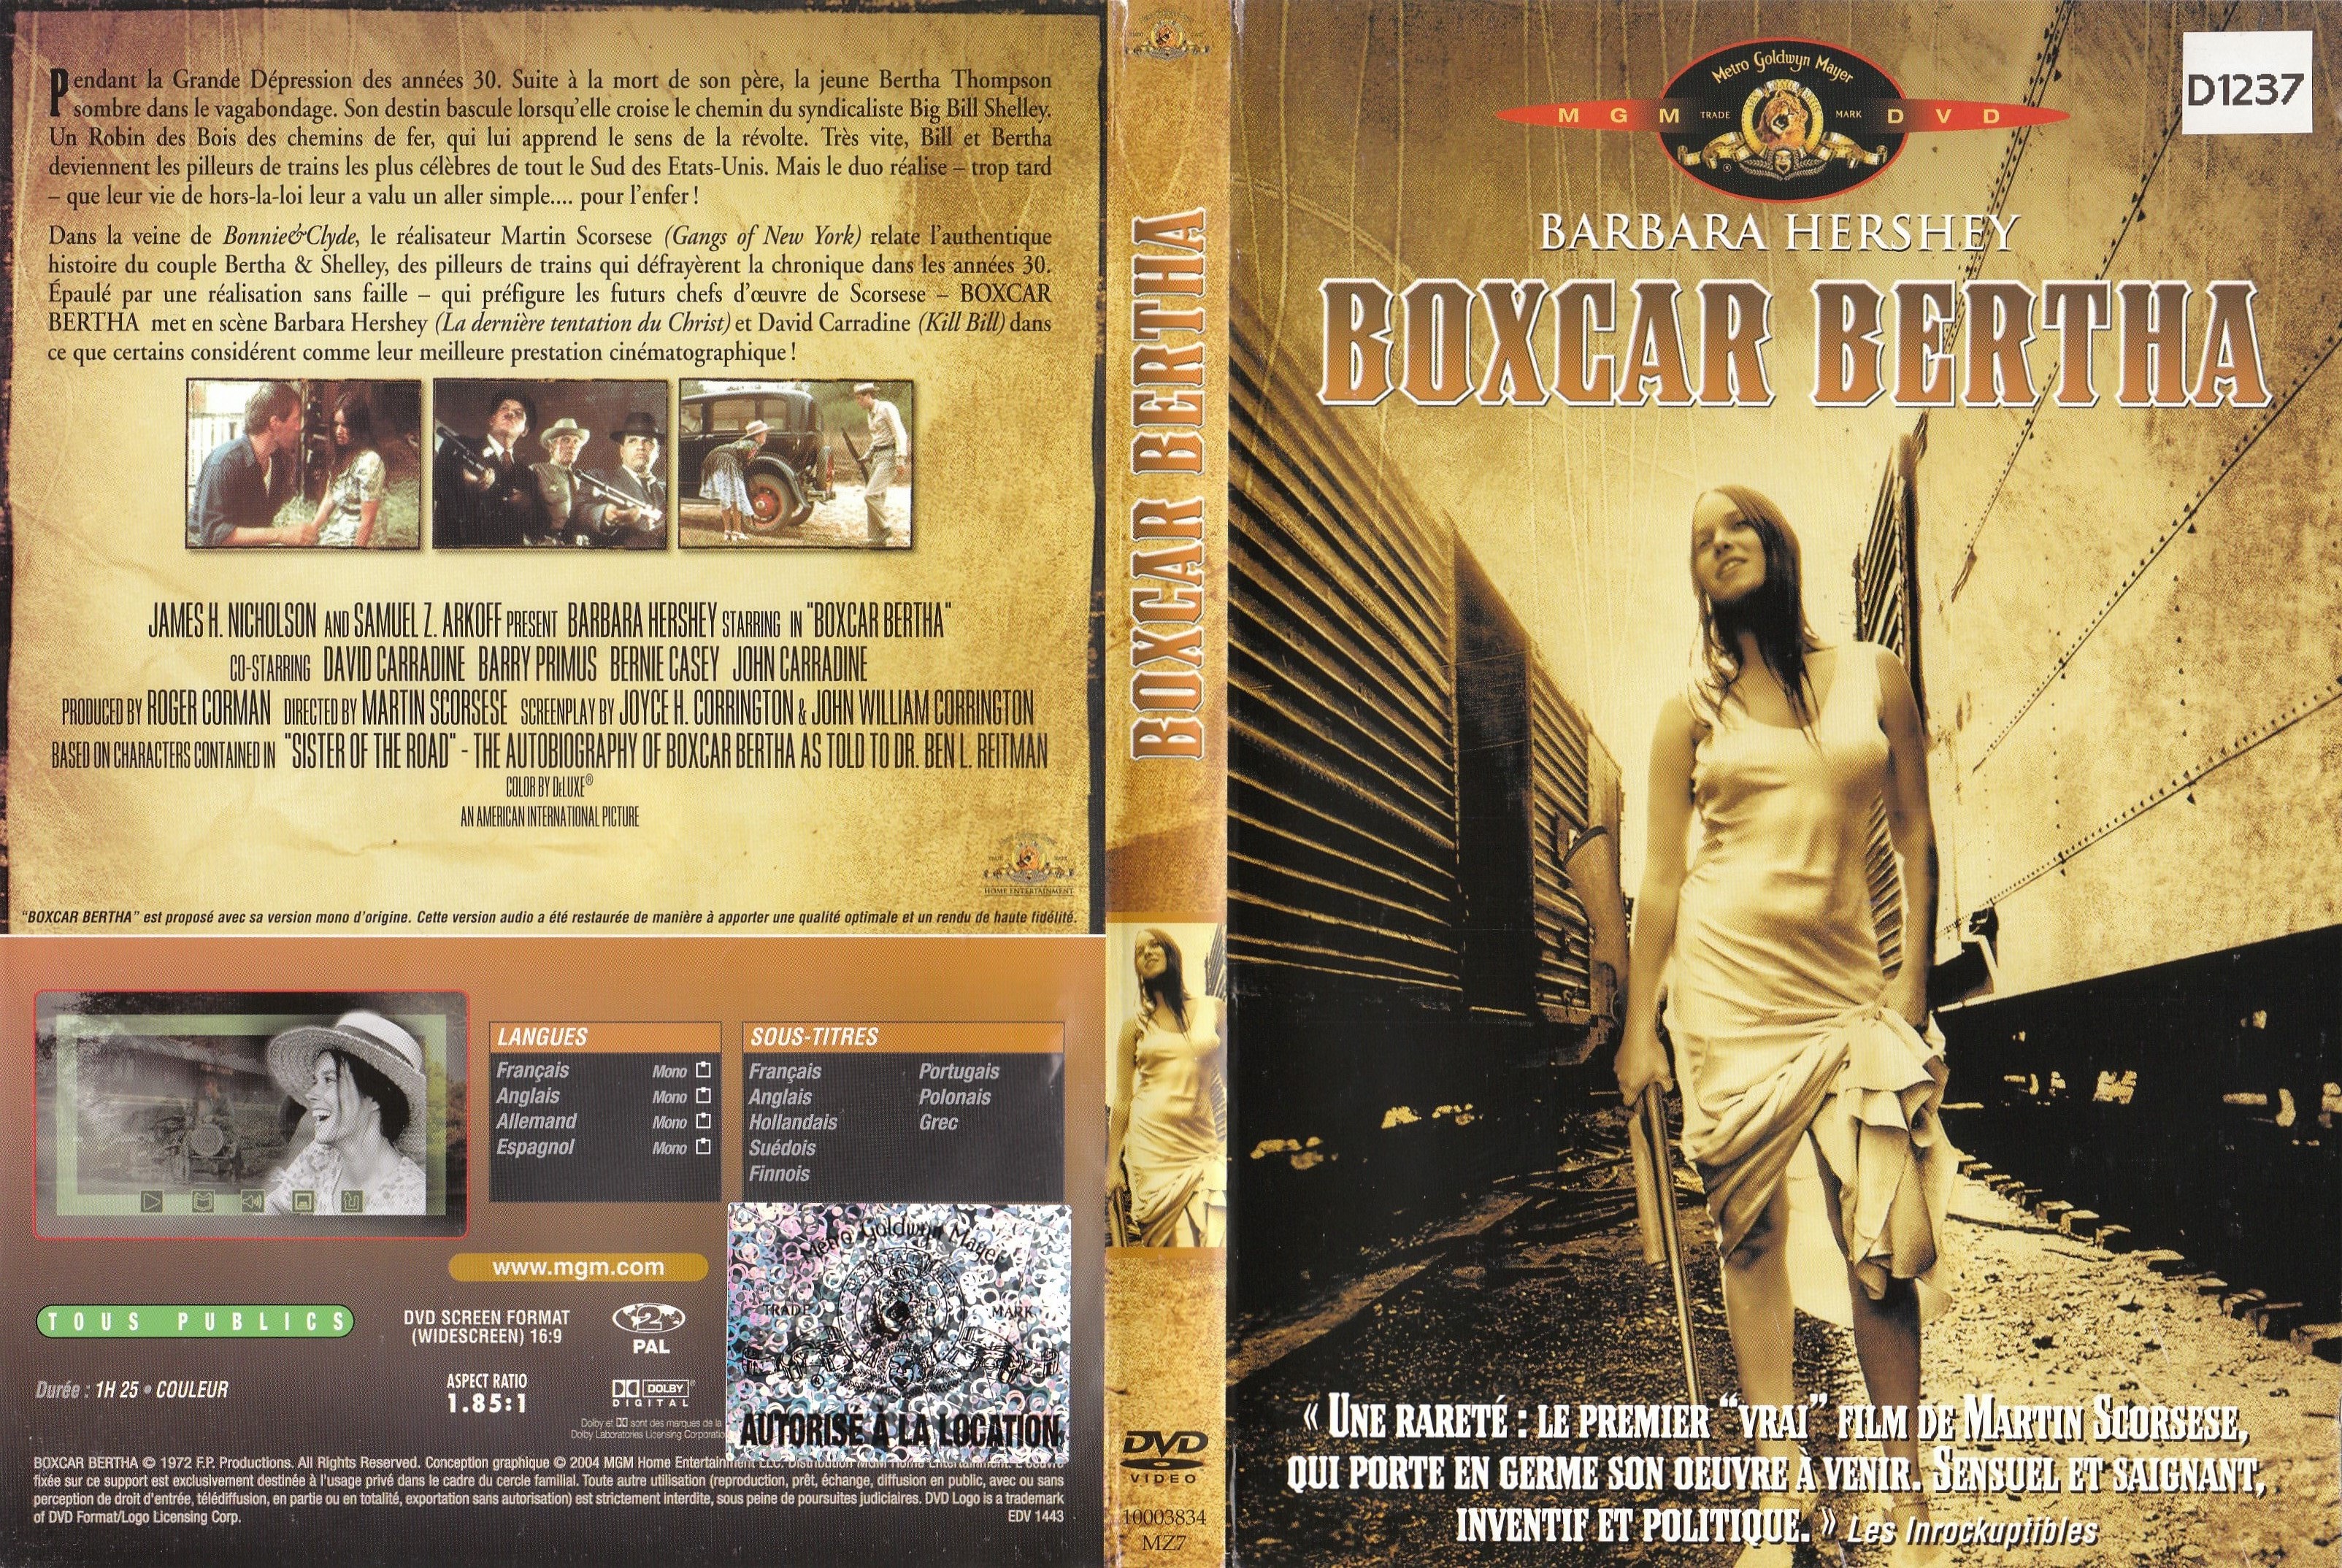 Jaquette DVD Boxcar bertha